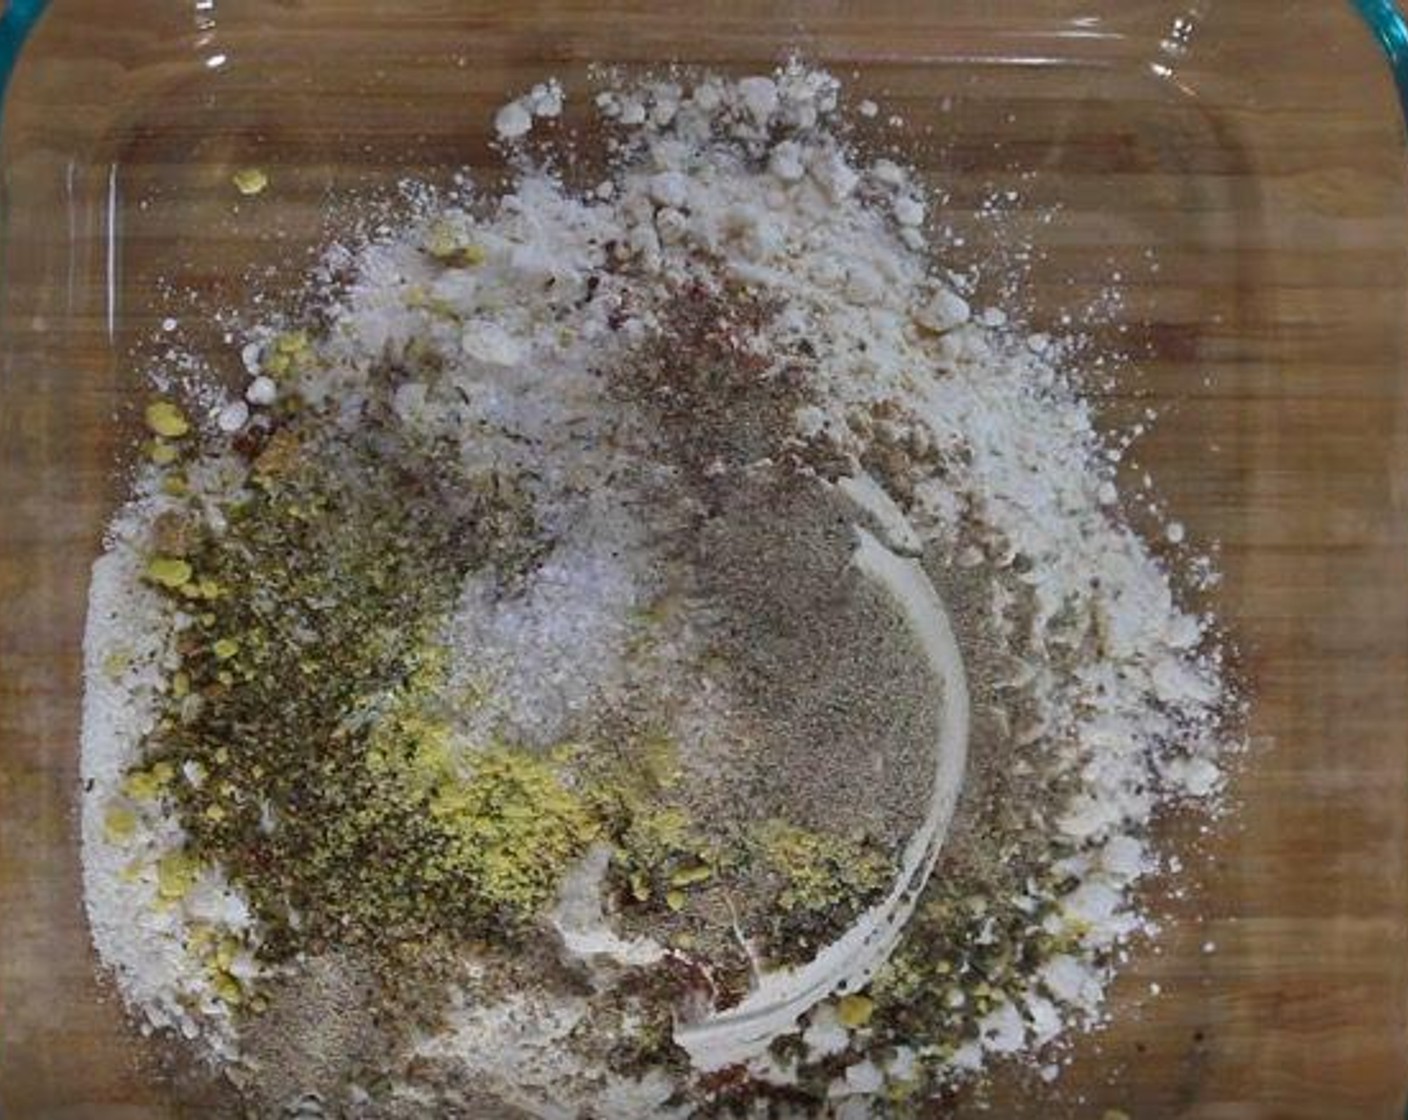 step 3 Into a baking dish, add All-Purpose Flour (1 cup), Dried Thyme (1/2 tsp), Paprika (1/2 Tbsp), Ground Ginger (1/2 tsp), Garlic Salt (1 tsp), Dried Basil (1/2 tsp), Dried Oregano (1/4 tsp), Celery Salt (1/2 tsp), Dry Mustard (1/2 tsp), and Ground White Pepper (1/2 tsp), and {@10:}. Mix well.